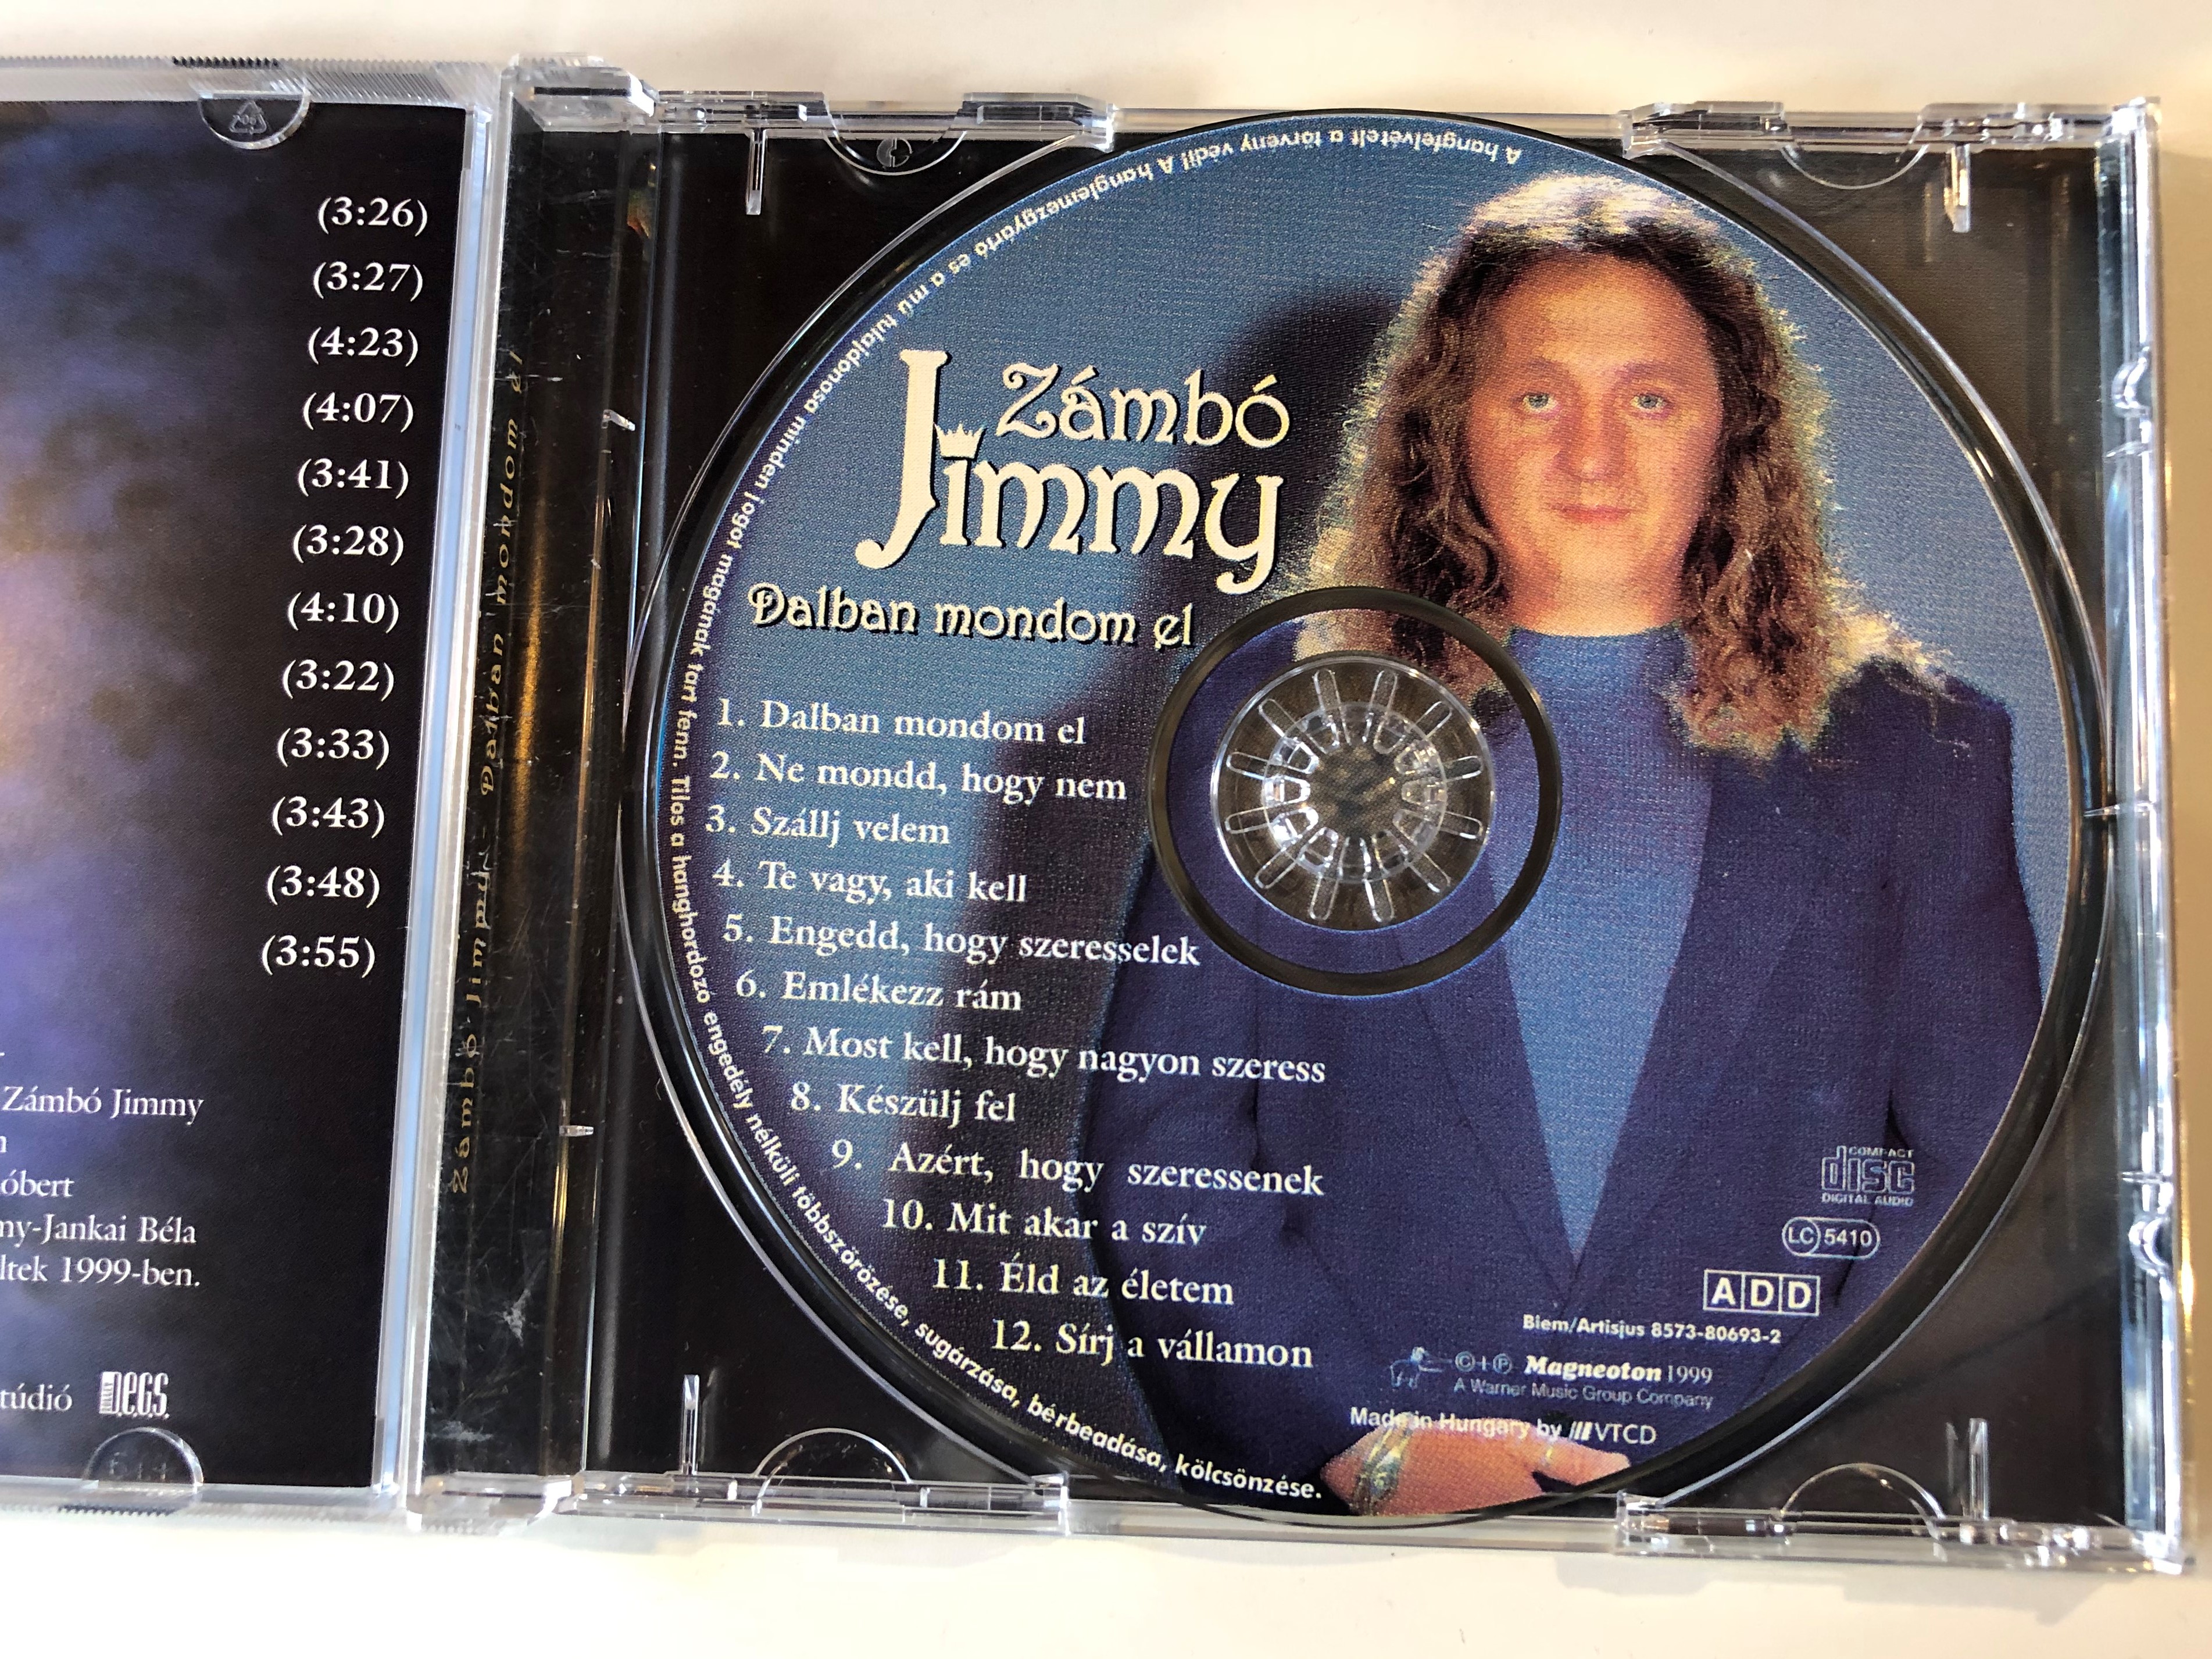 z-mb-jimmy-dalban-mondom-el-magneoton-audio-cd-1999-8573-80693-2-2-.jpg